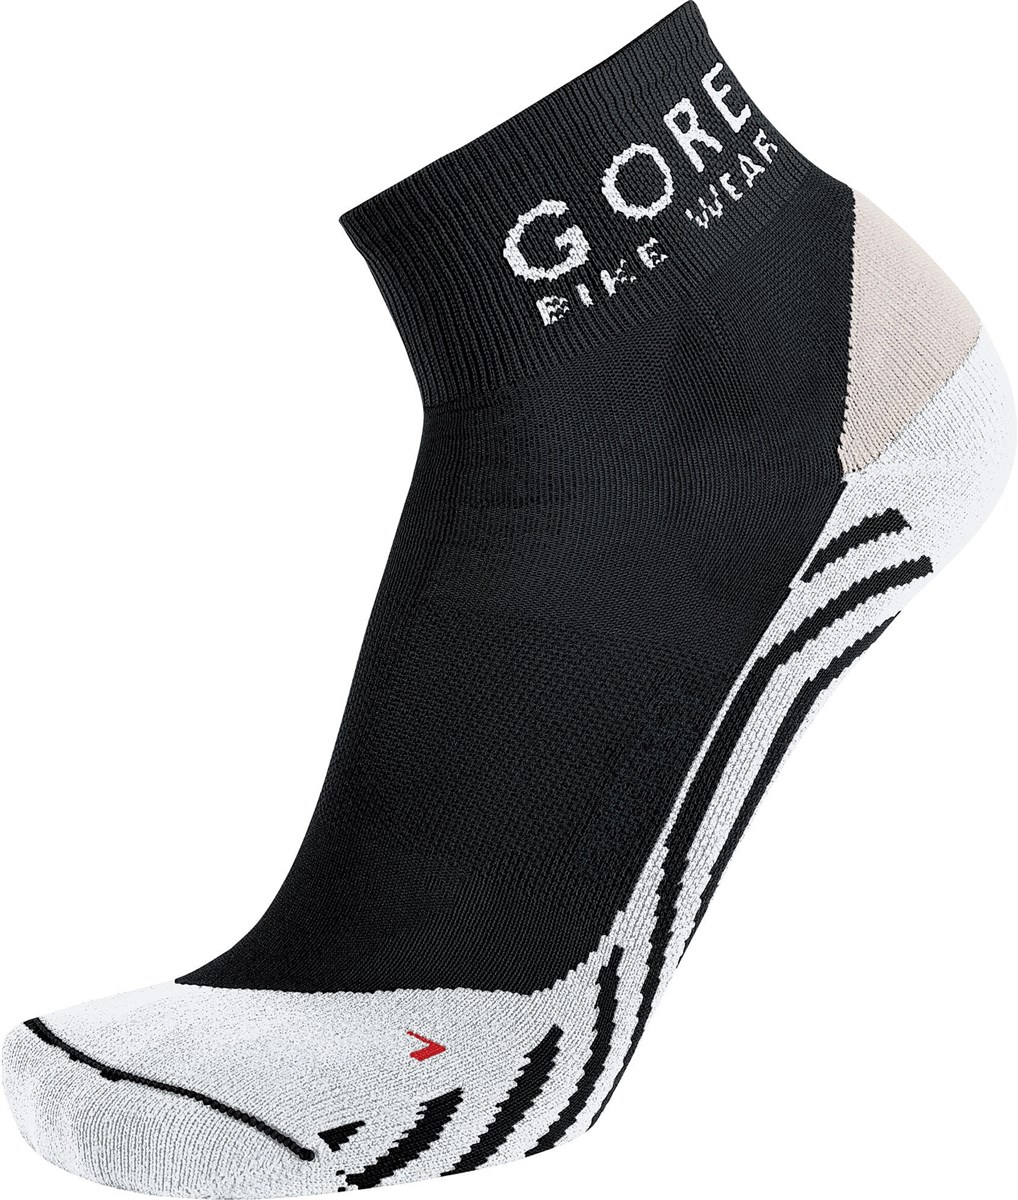 Gore Contest Socks AW17